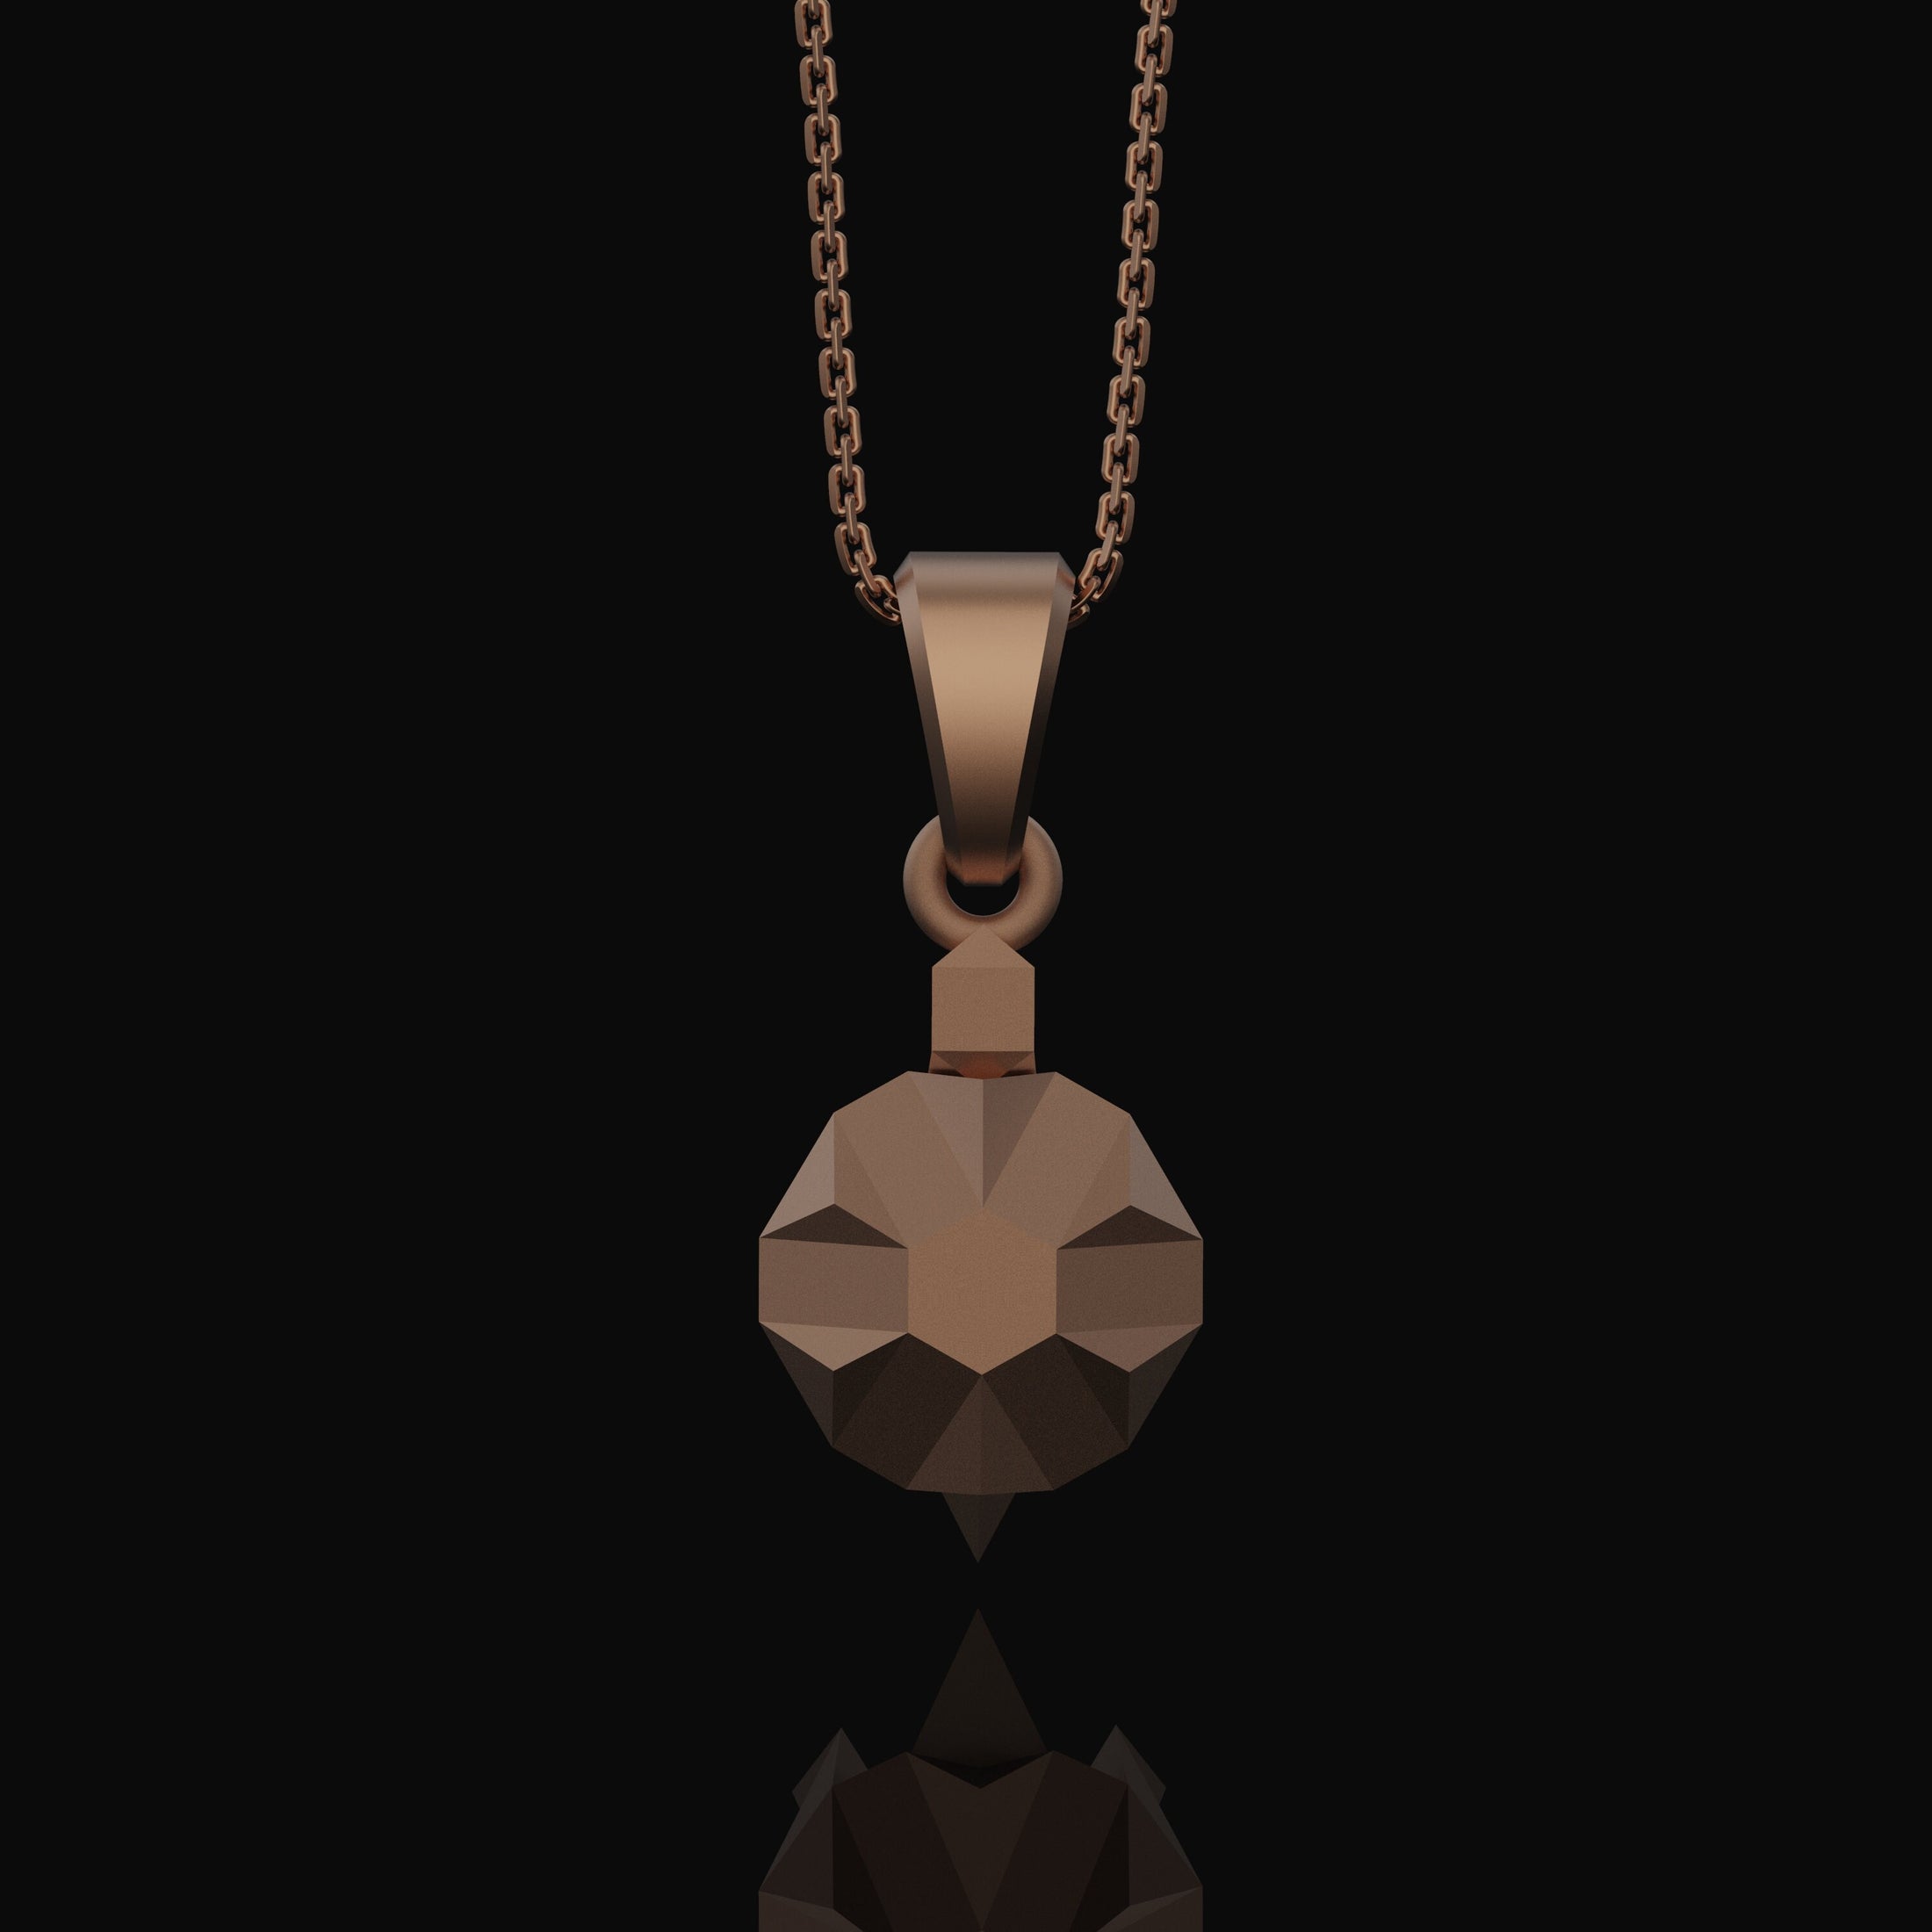 Origami Tortoise Charm Necklace - Silver Geometrical Pendant, Elegant Folded Turtle Design, Unique Artistic Jewelry Rose Gold Matte